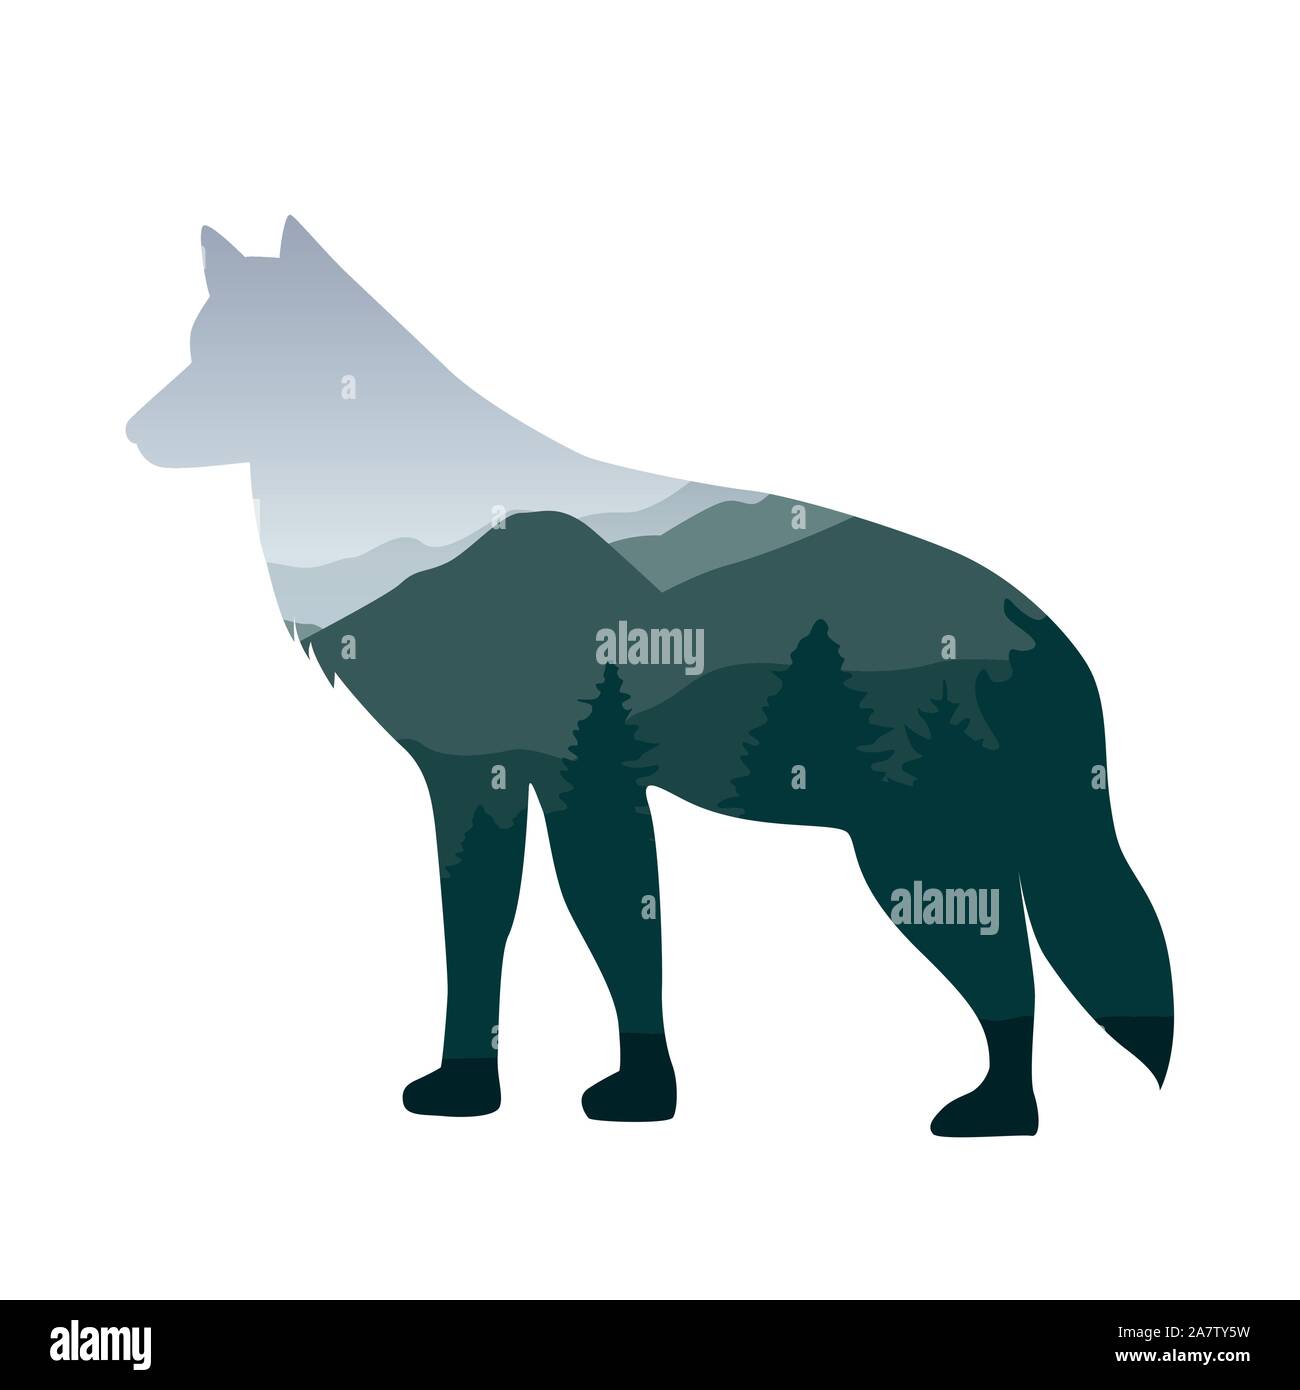 Tierwelt wolf Grüne wald landschaft silhouette Vektor-illustration EPS 10. Stock Vektor